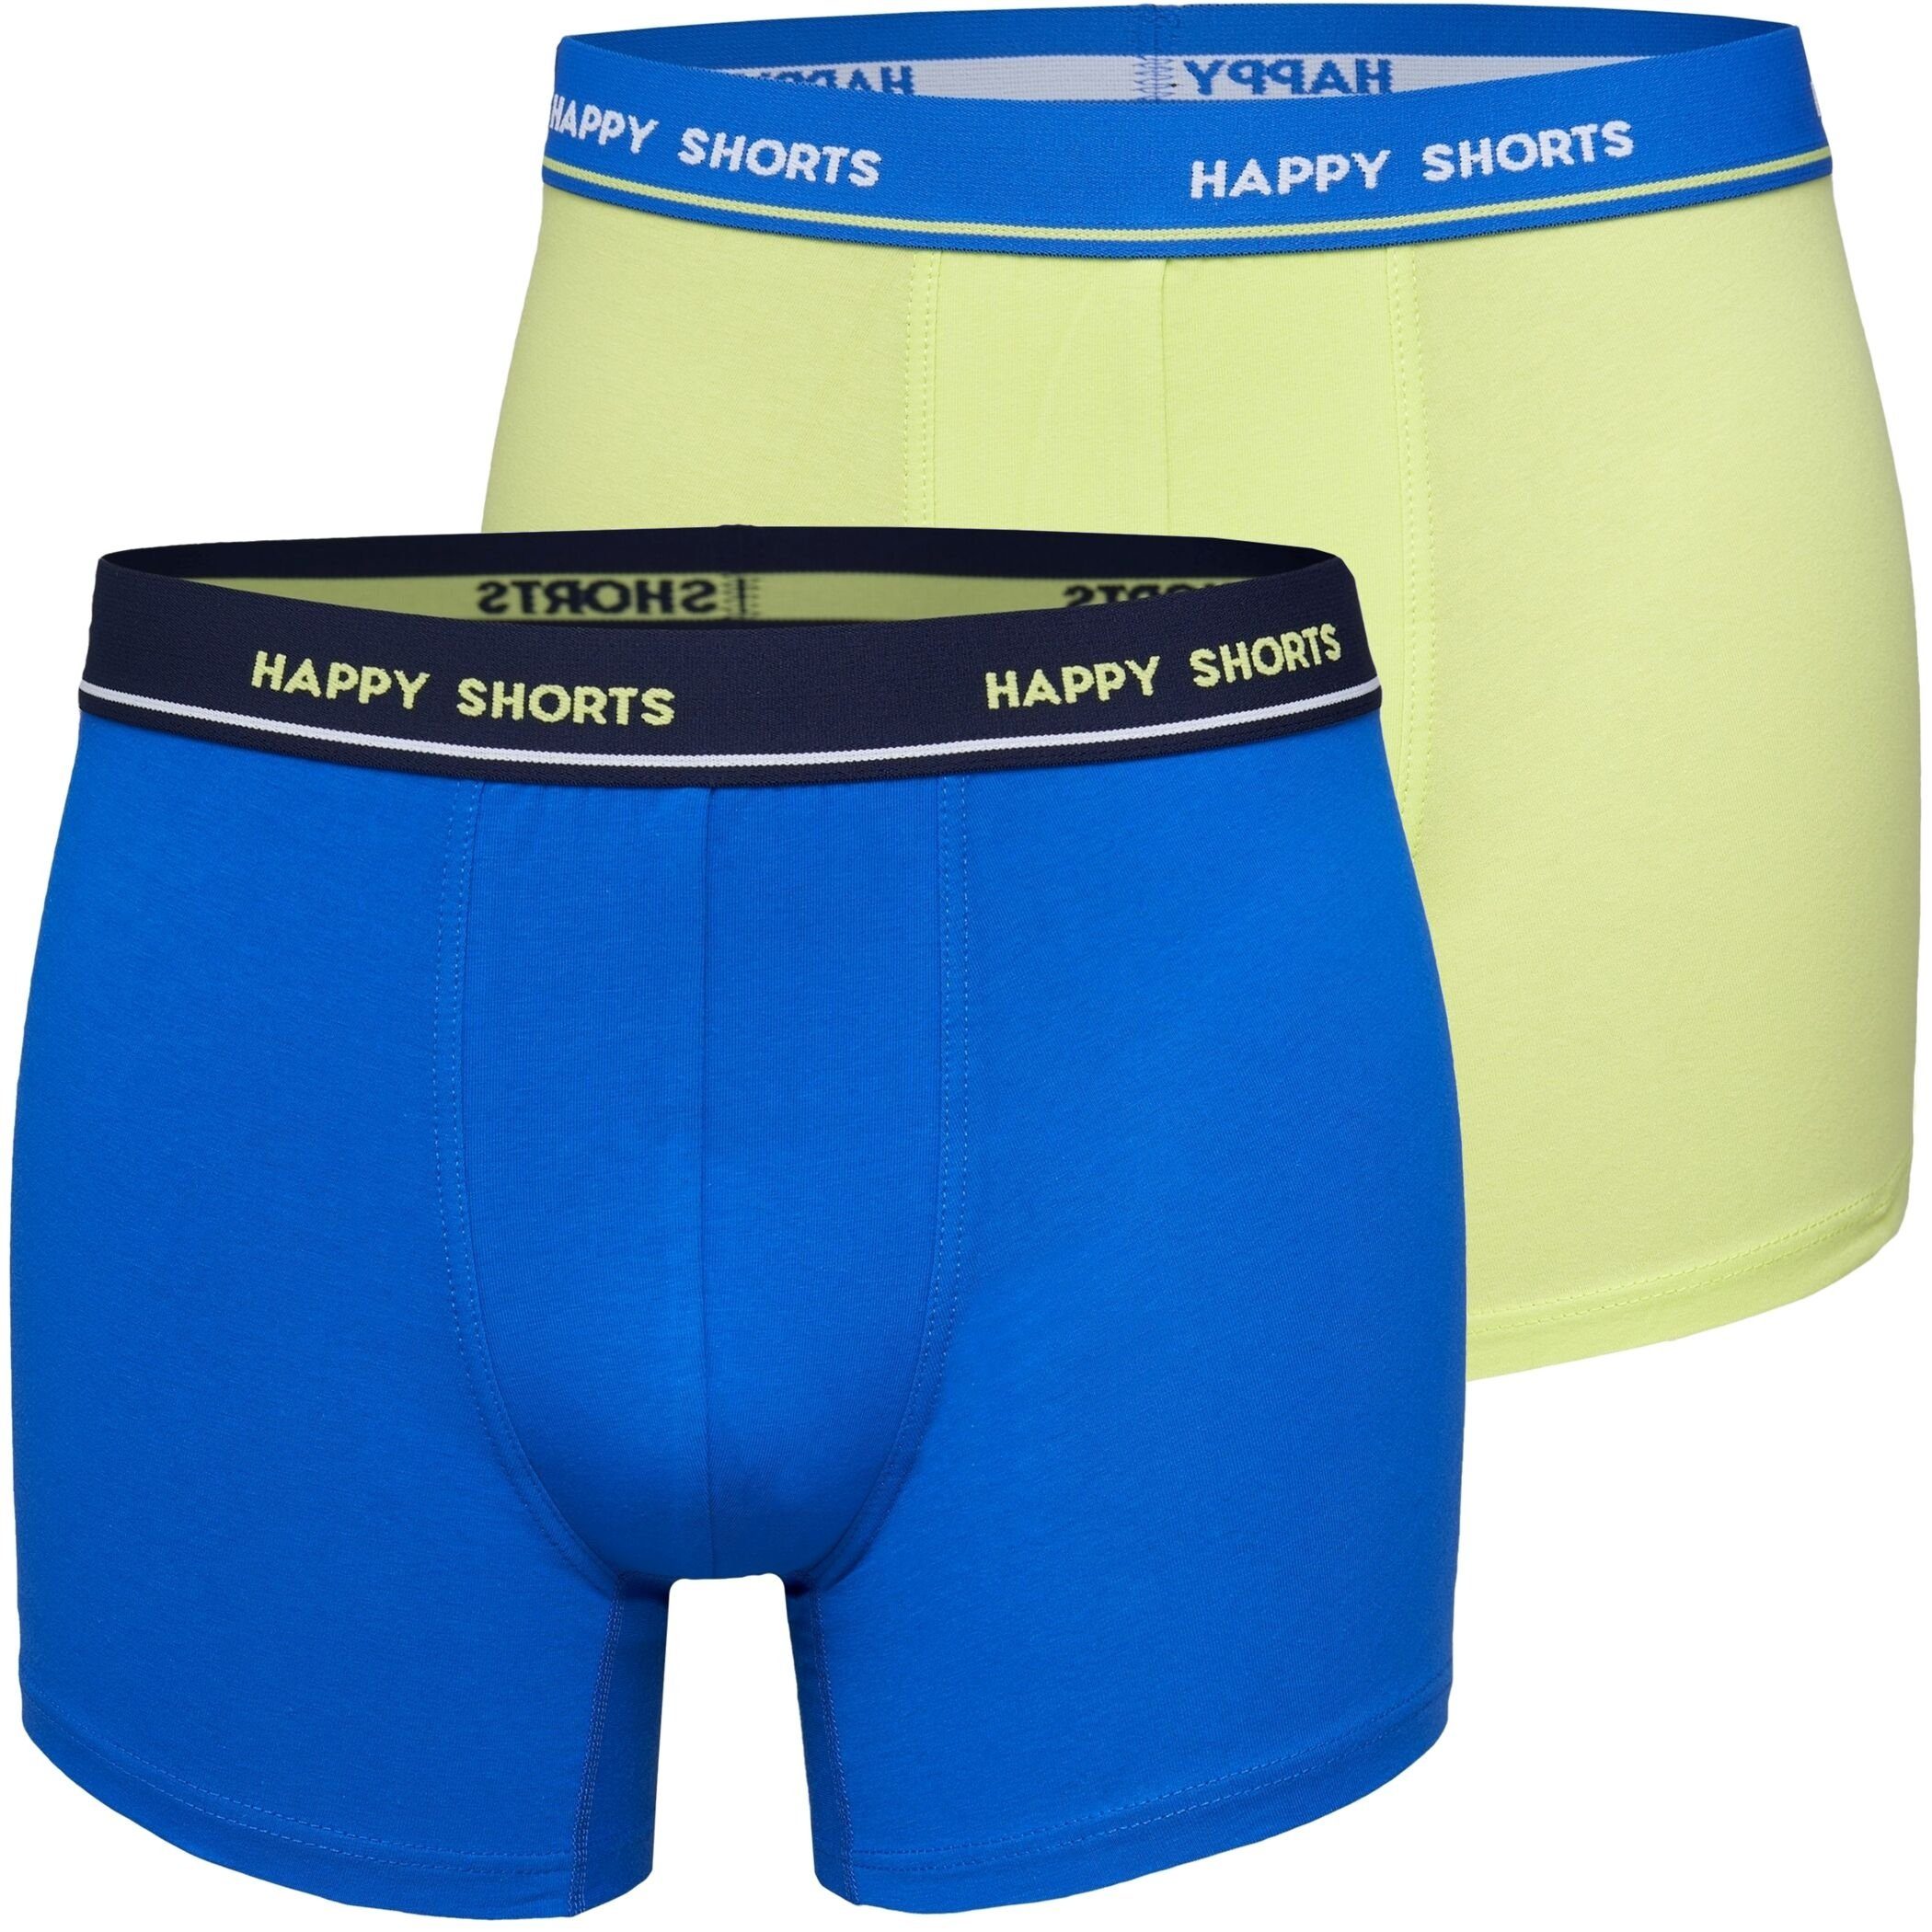 HAPPY SHORTS Trunk 2 Happy Shorts Pants Jersey Trunk Herren Boxershorts Blau und Gelb (1-St) Uni 3